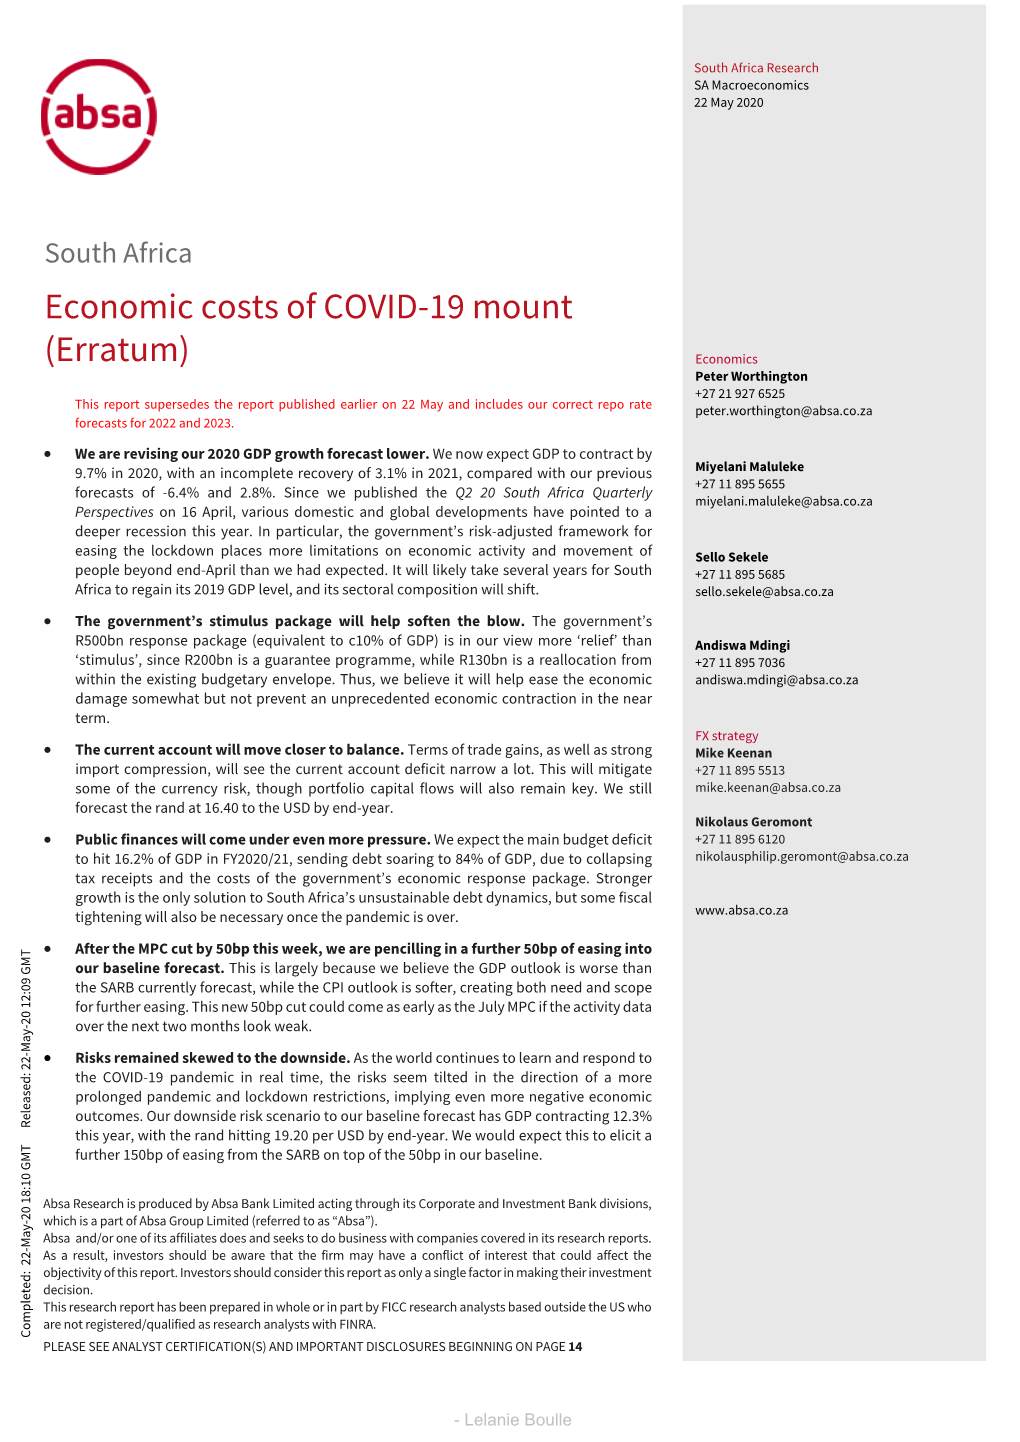 Economic Costs of COVID-19 Mount